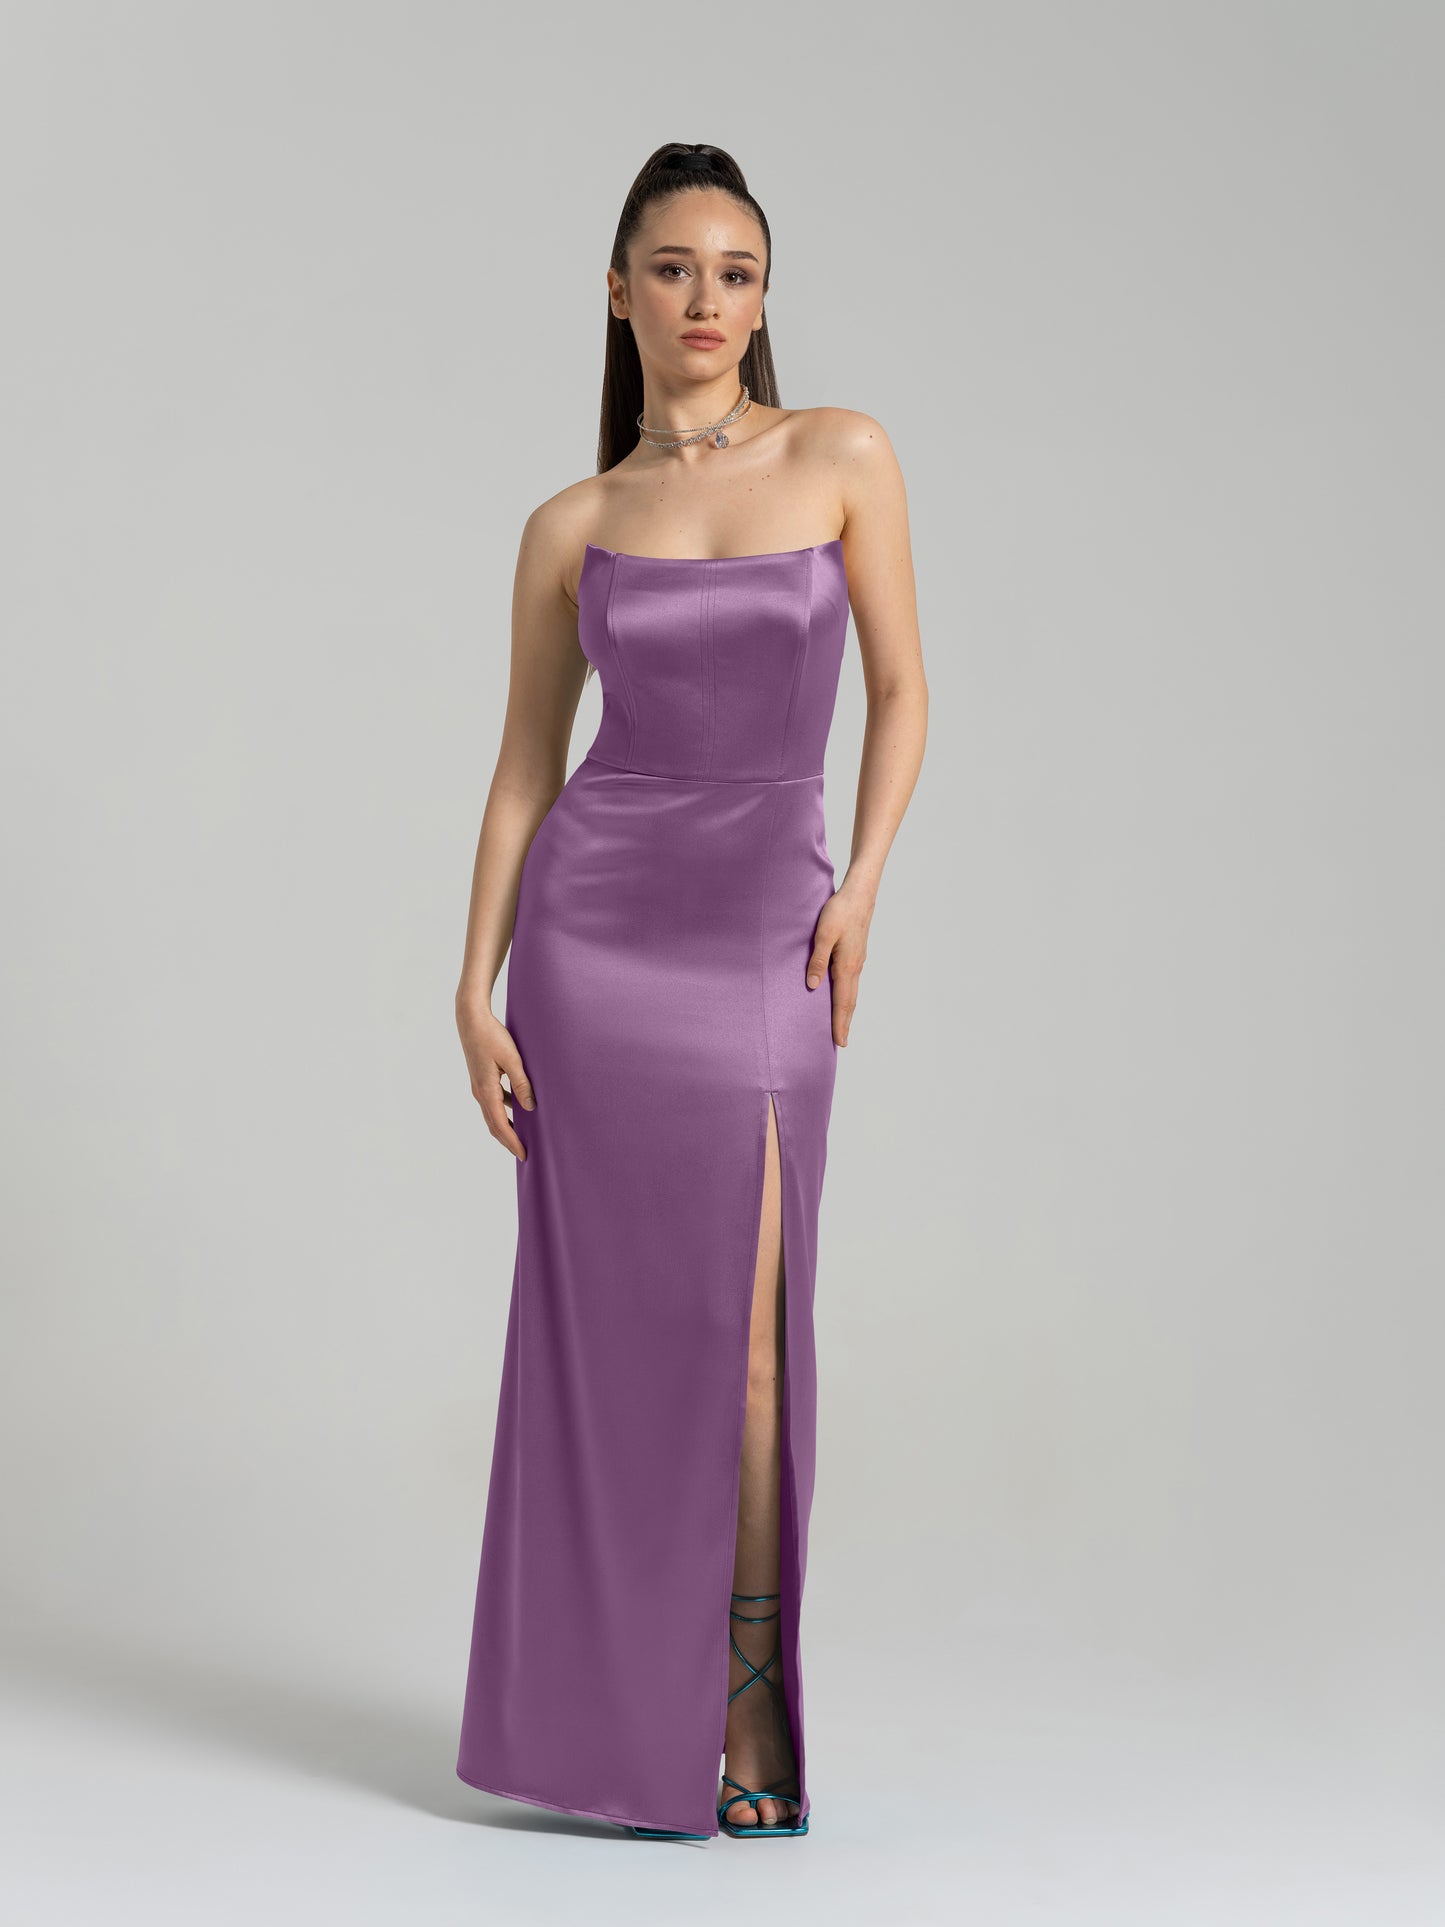 Queen of Hearts Satin Maxi Dress - Posh Purple by Tia Dorraine Women's Luxury Fashion Designer Clothing Brand